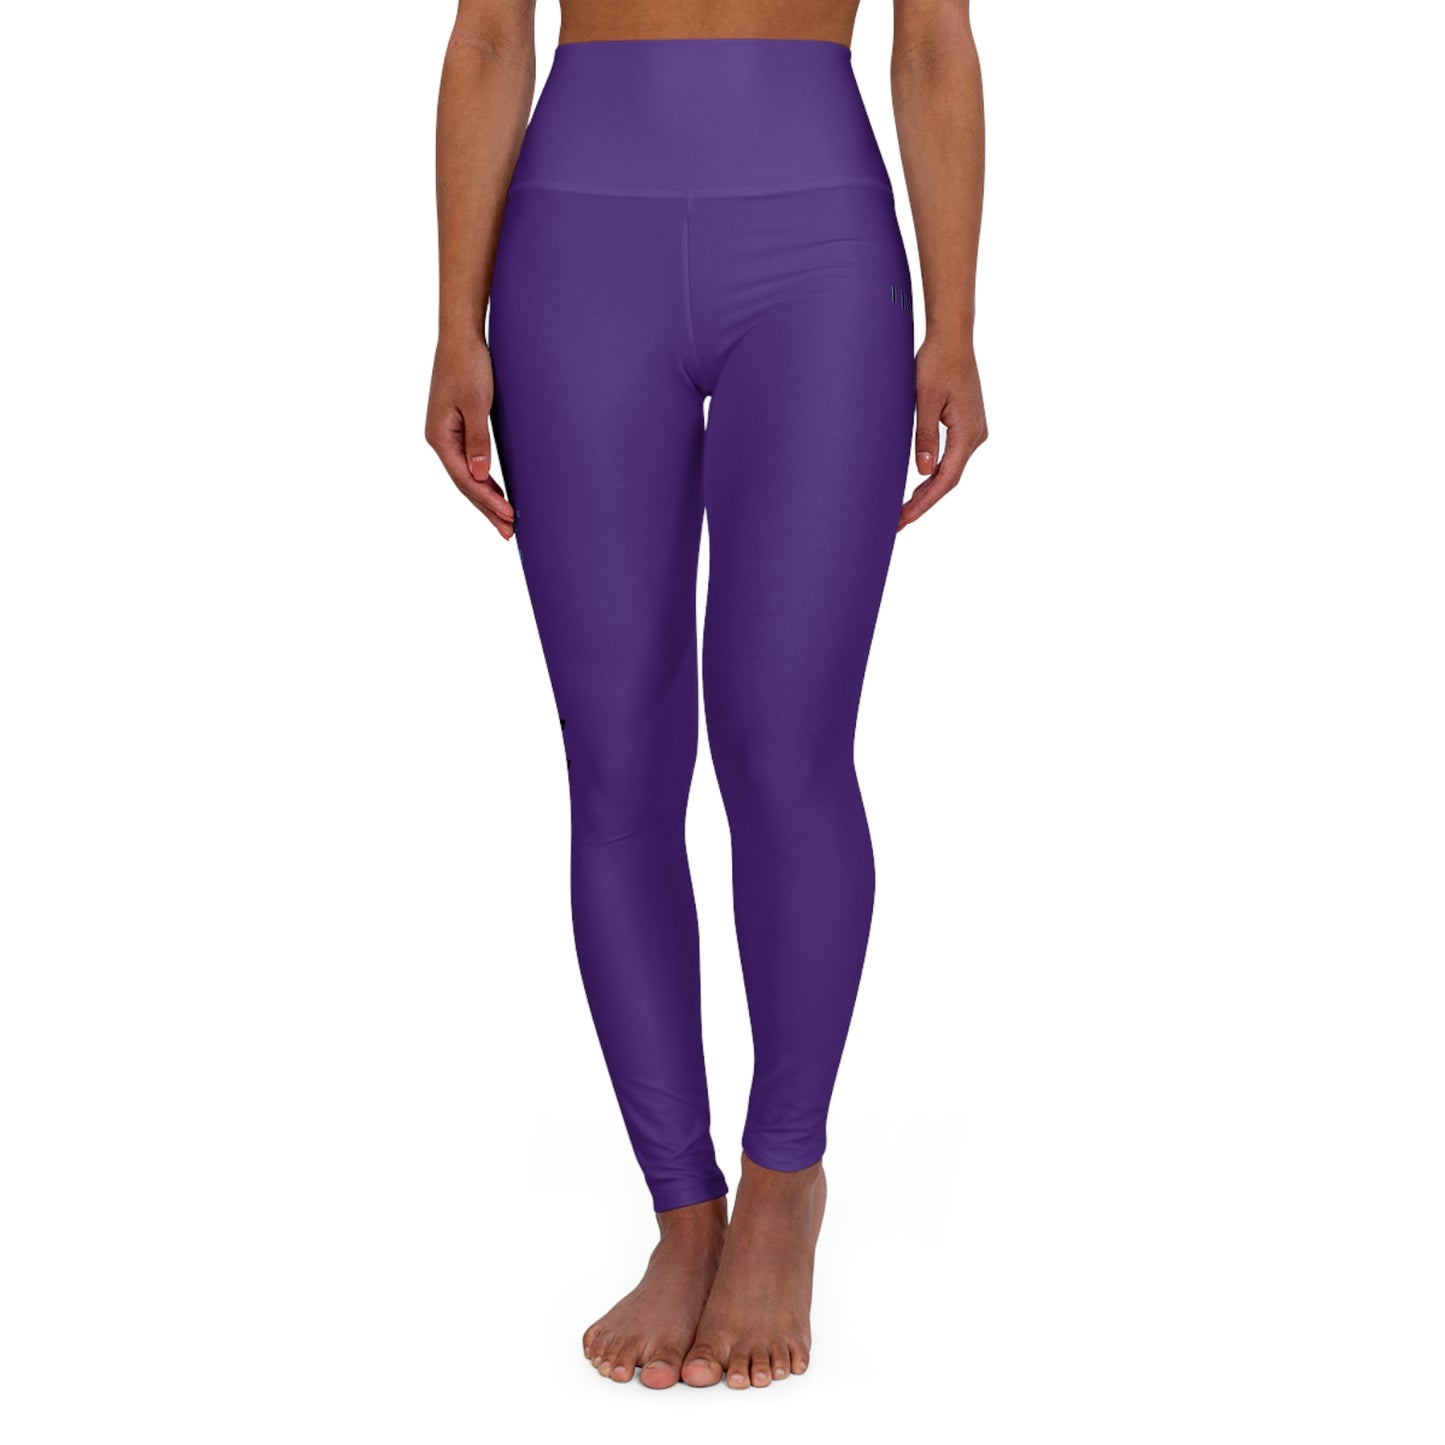 CWTC Tribe Diva Purple High Waisted Yoga Leggings